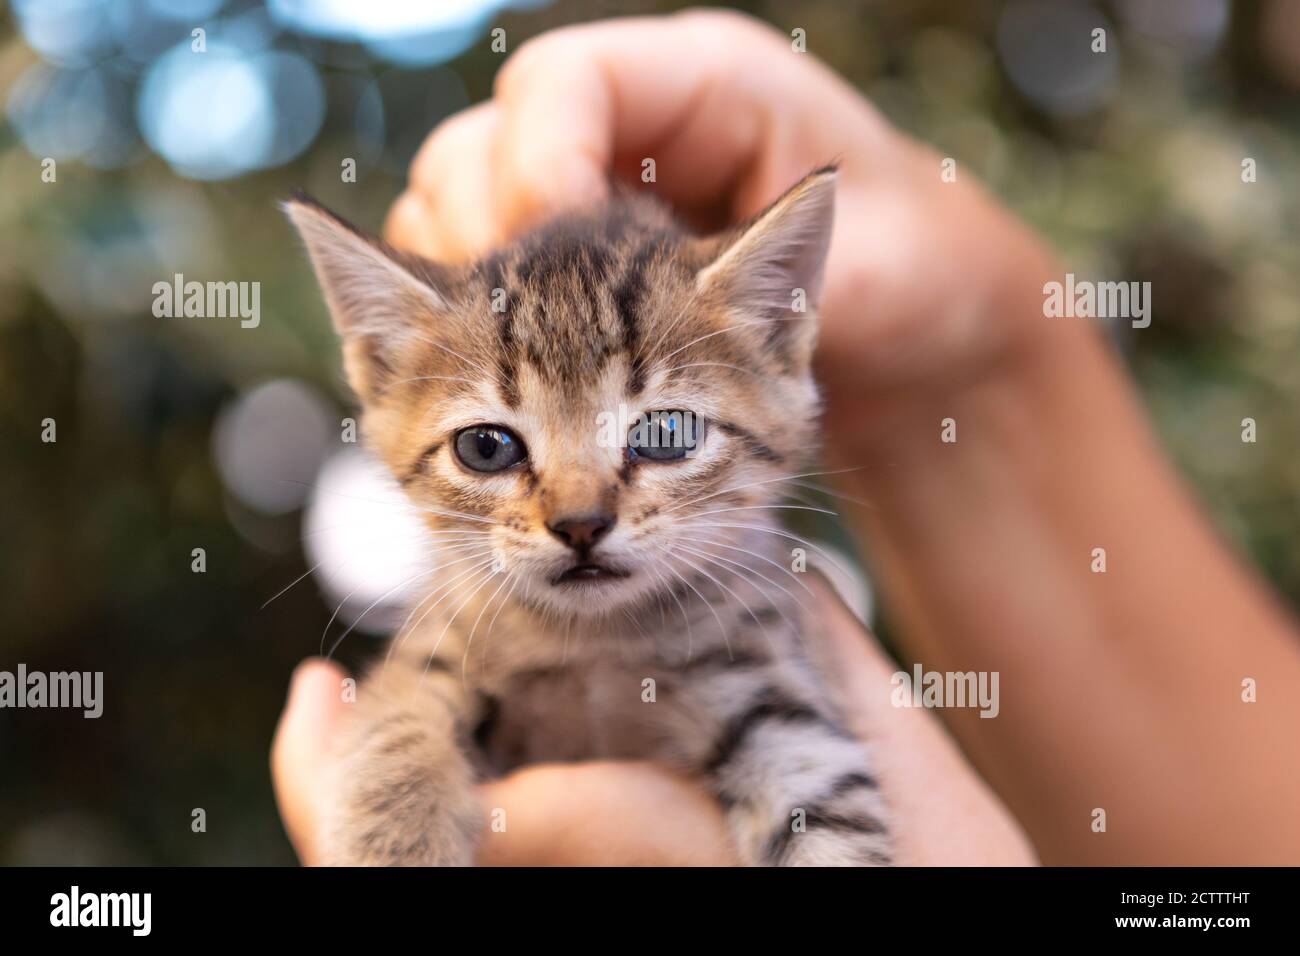 Hands holding a cute kitten in the garden Stock Photo